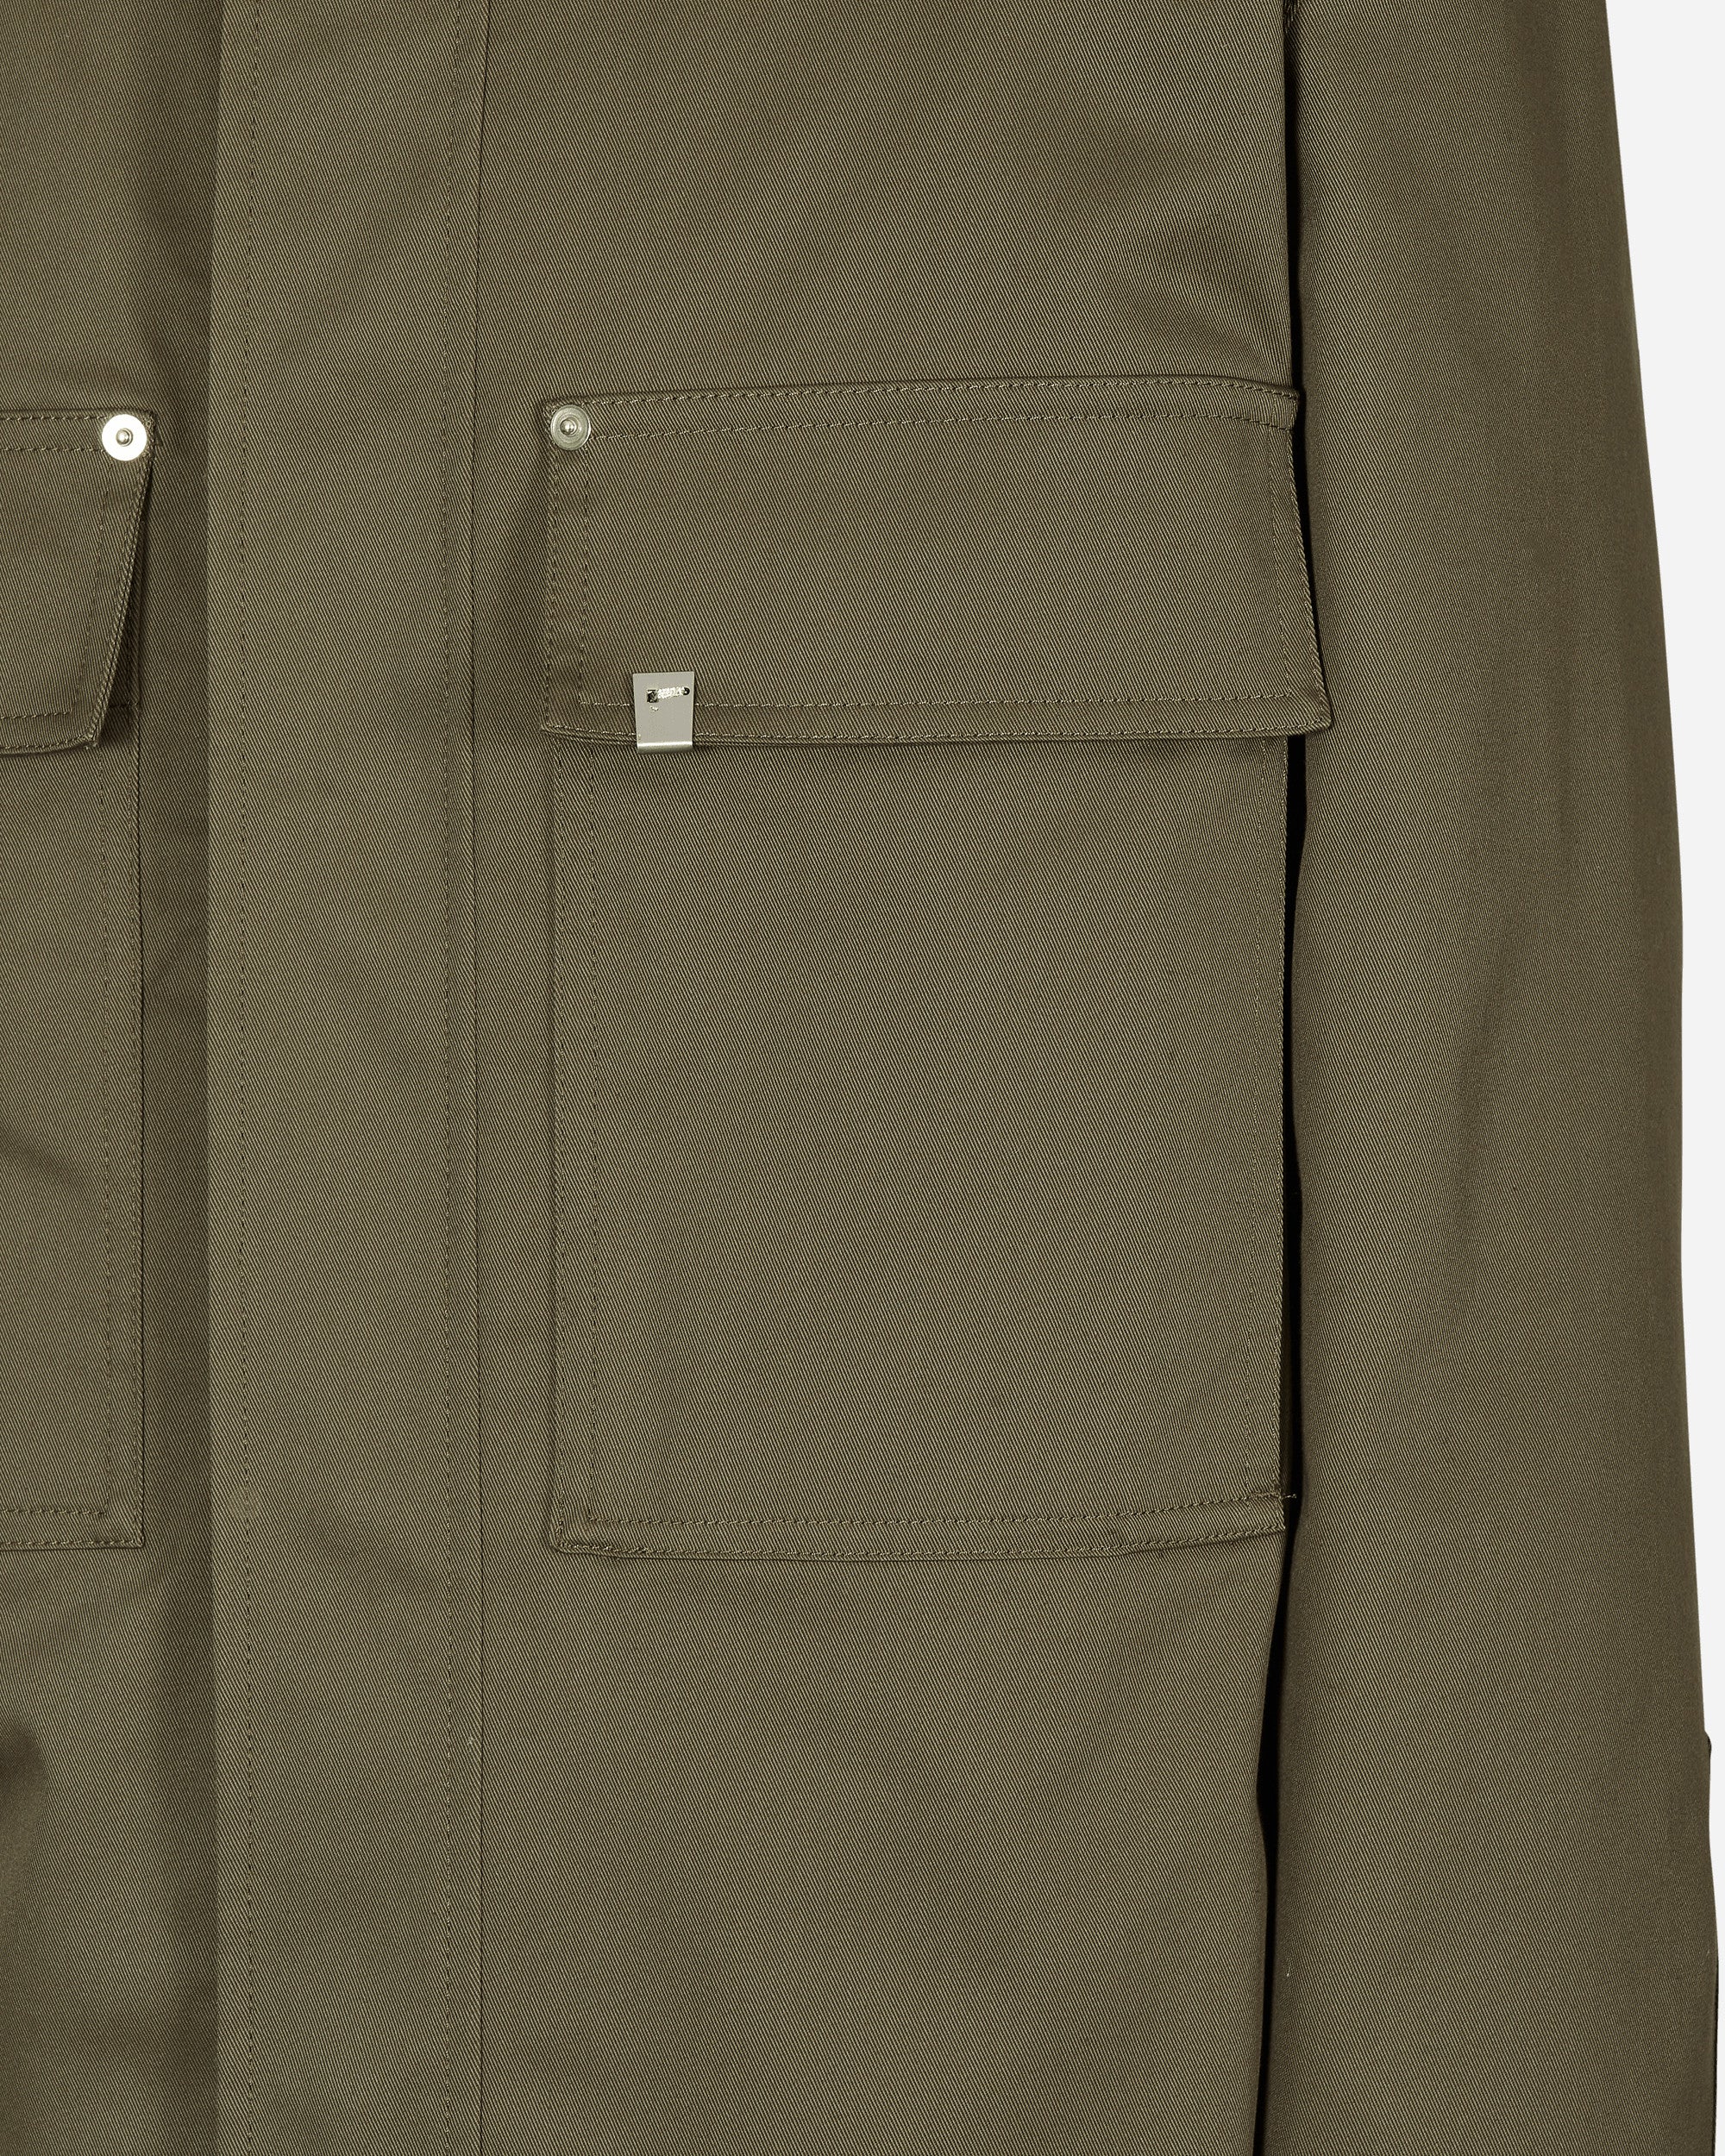 1017 Alyx 9SM Military Shirt Jacket Military Green Shirts Longsleeve AAMSH0168FA01 GRN0004